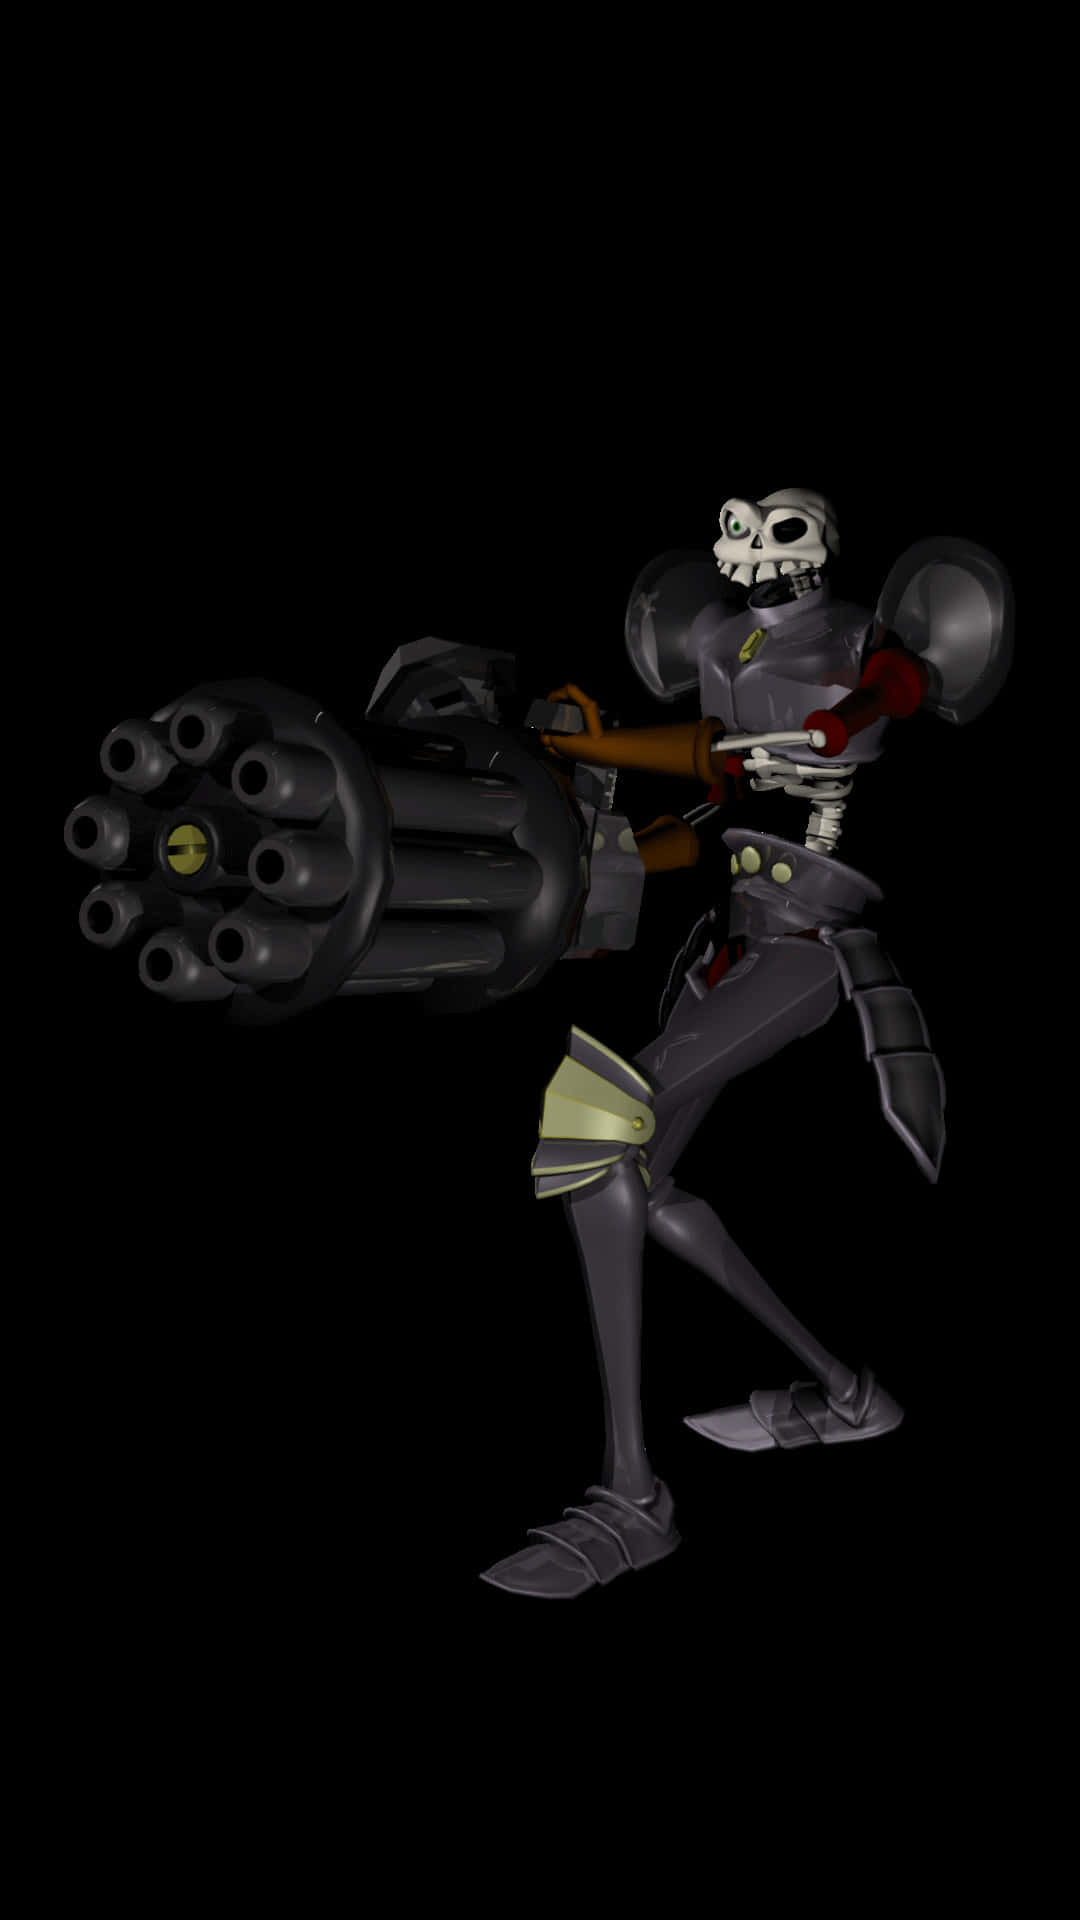 A Skeleton Holding A Gun Background